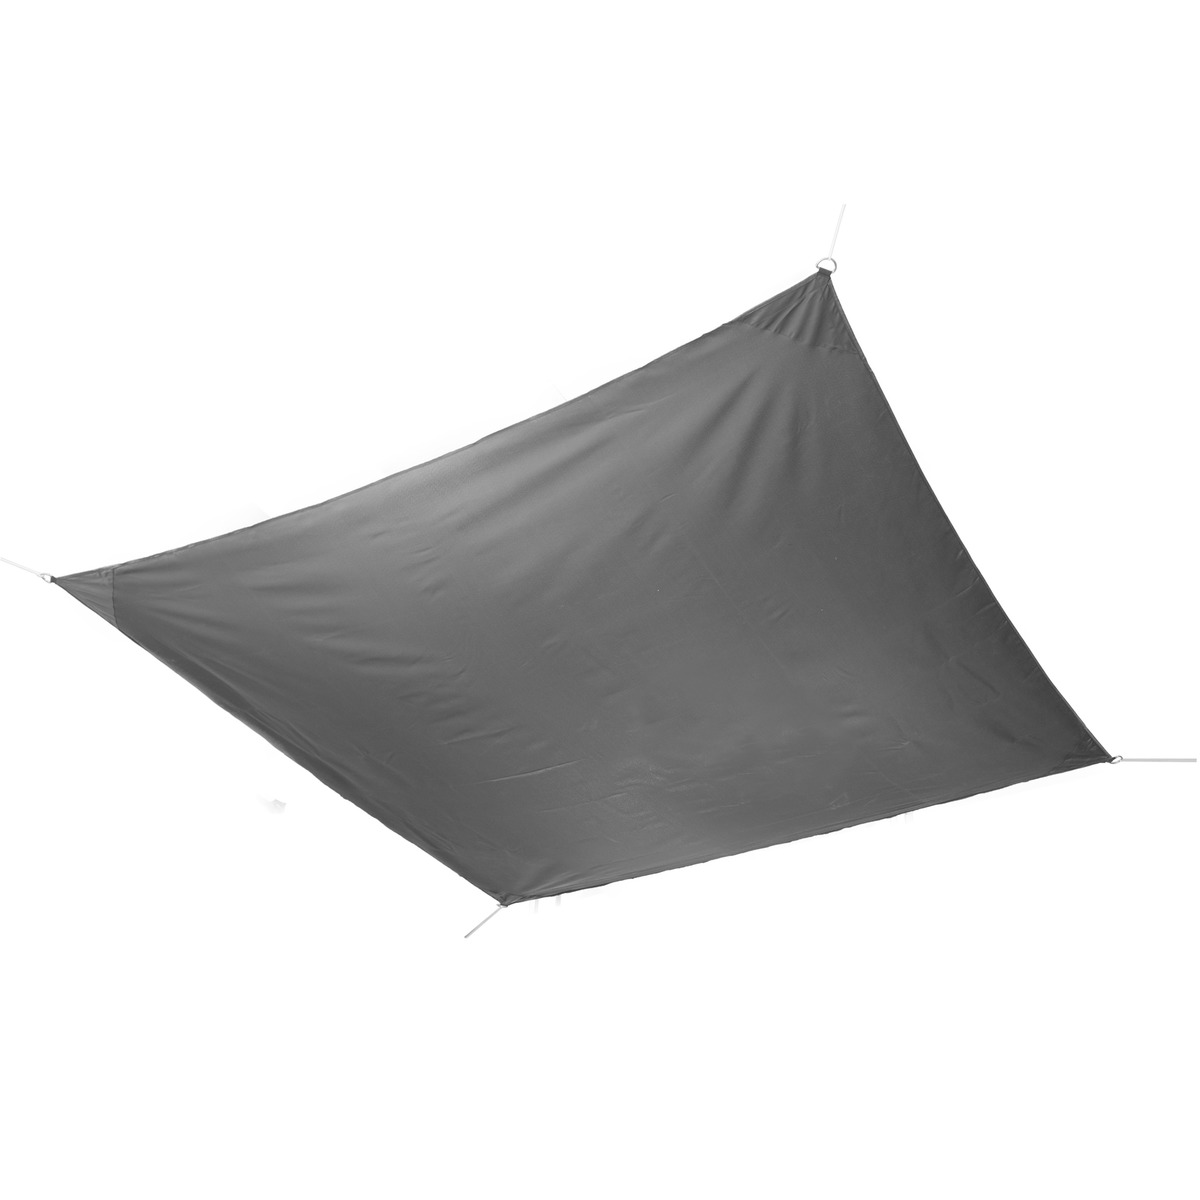 Toile d'ombrage carré - 100% Polyester - 2 x 2 m - Gris